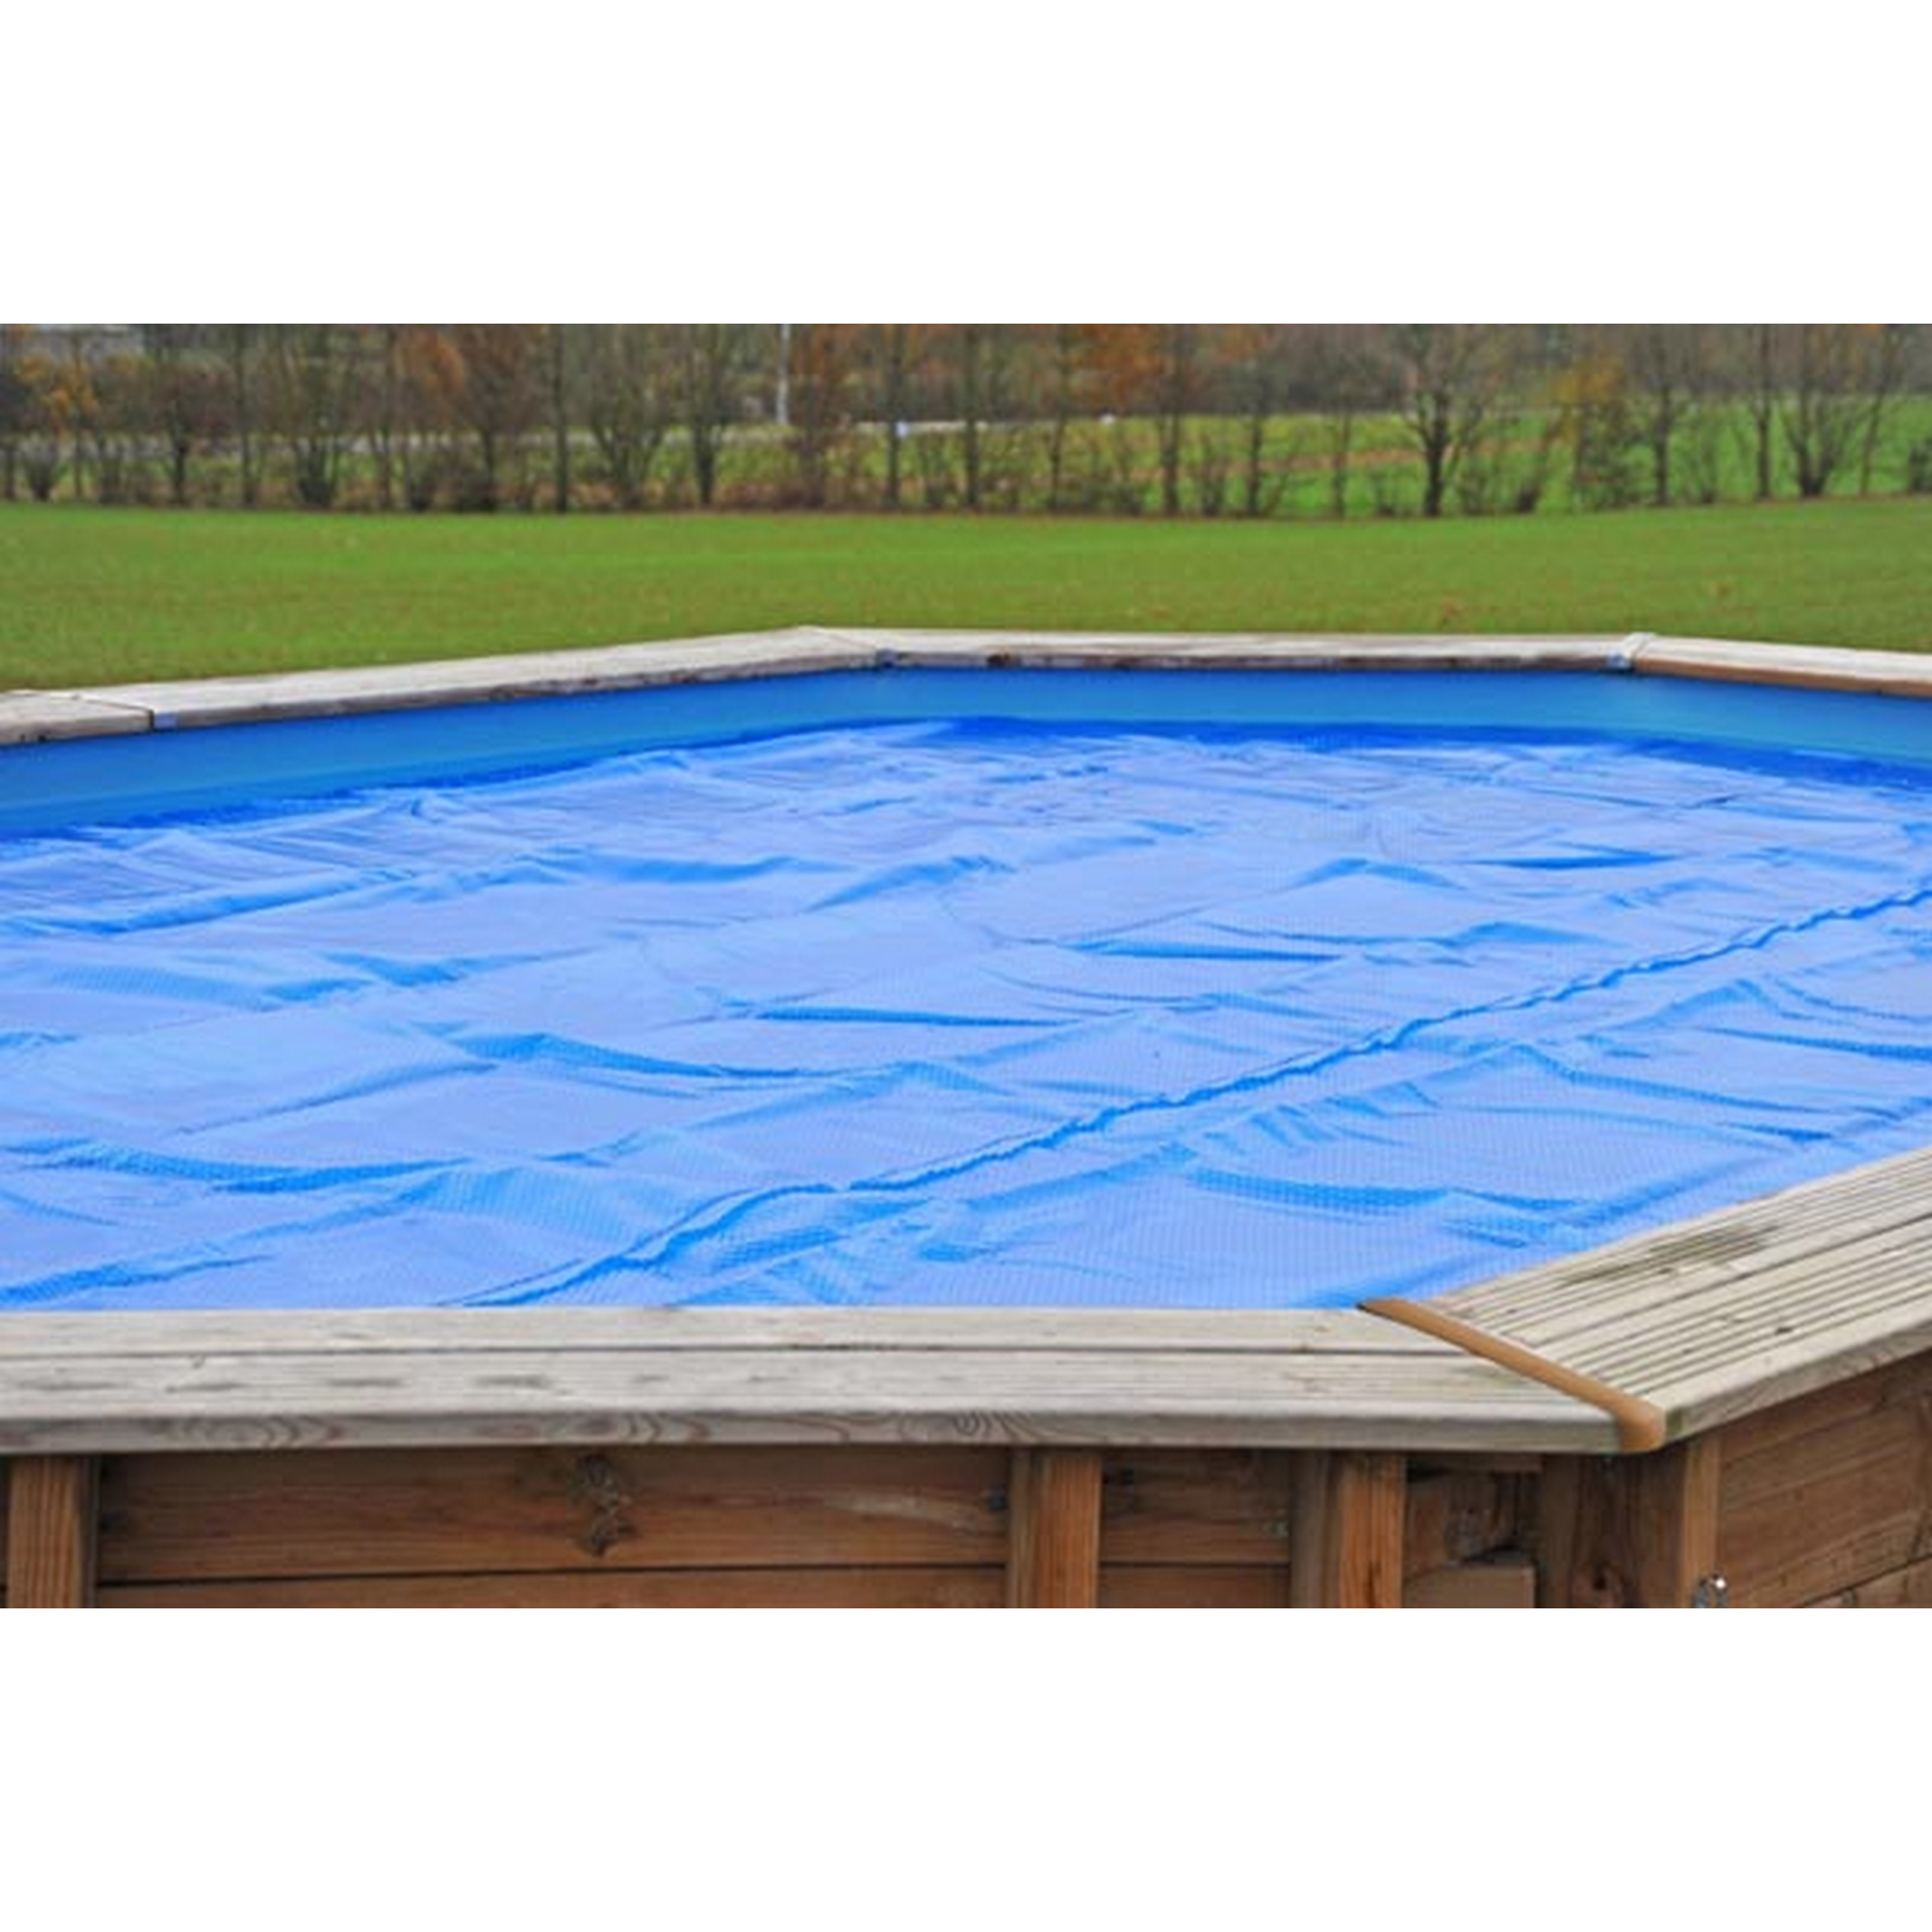 Sommerabdeckplane für Pool 'Cannelle' blau 498 x 298 cm + product picture